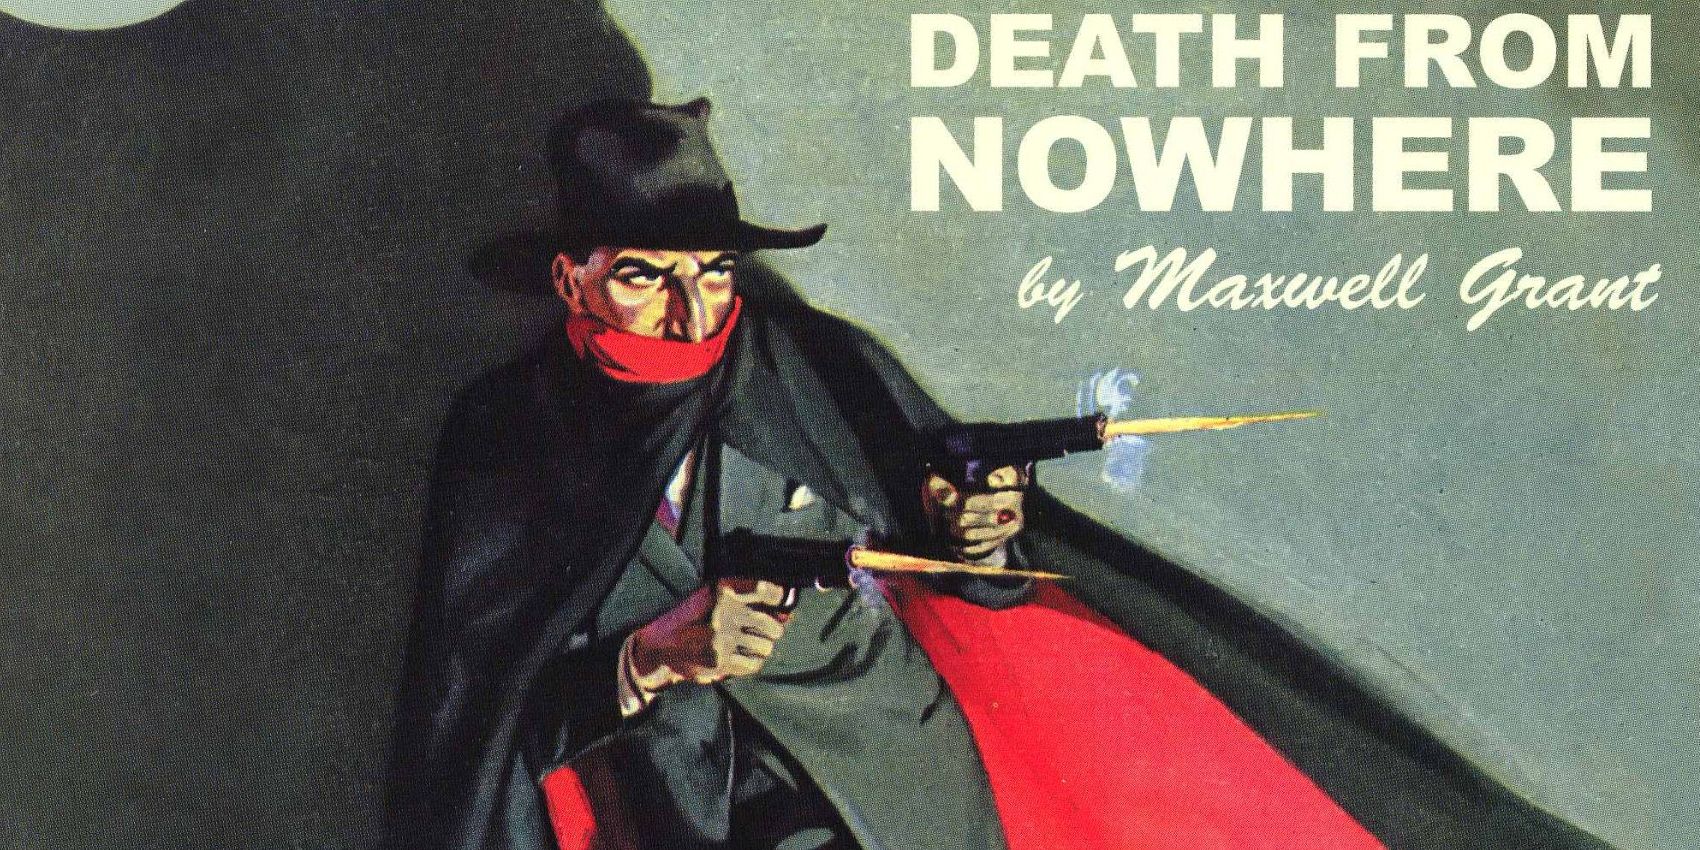 A cover shows The Shadow firing two guns under a title header.